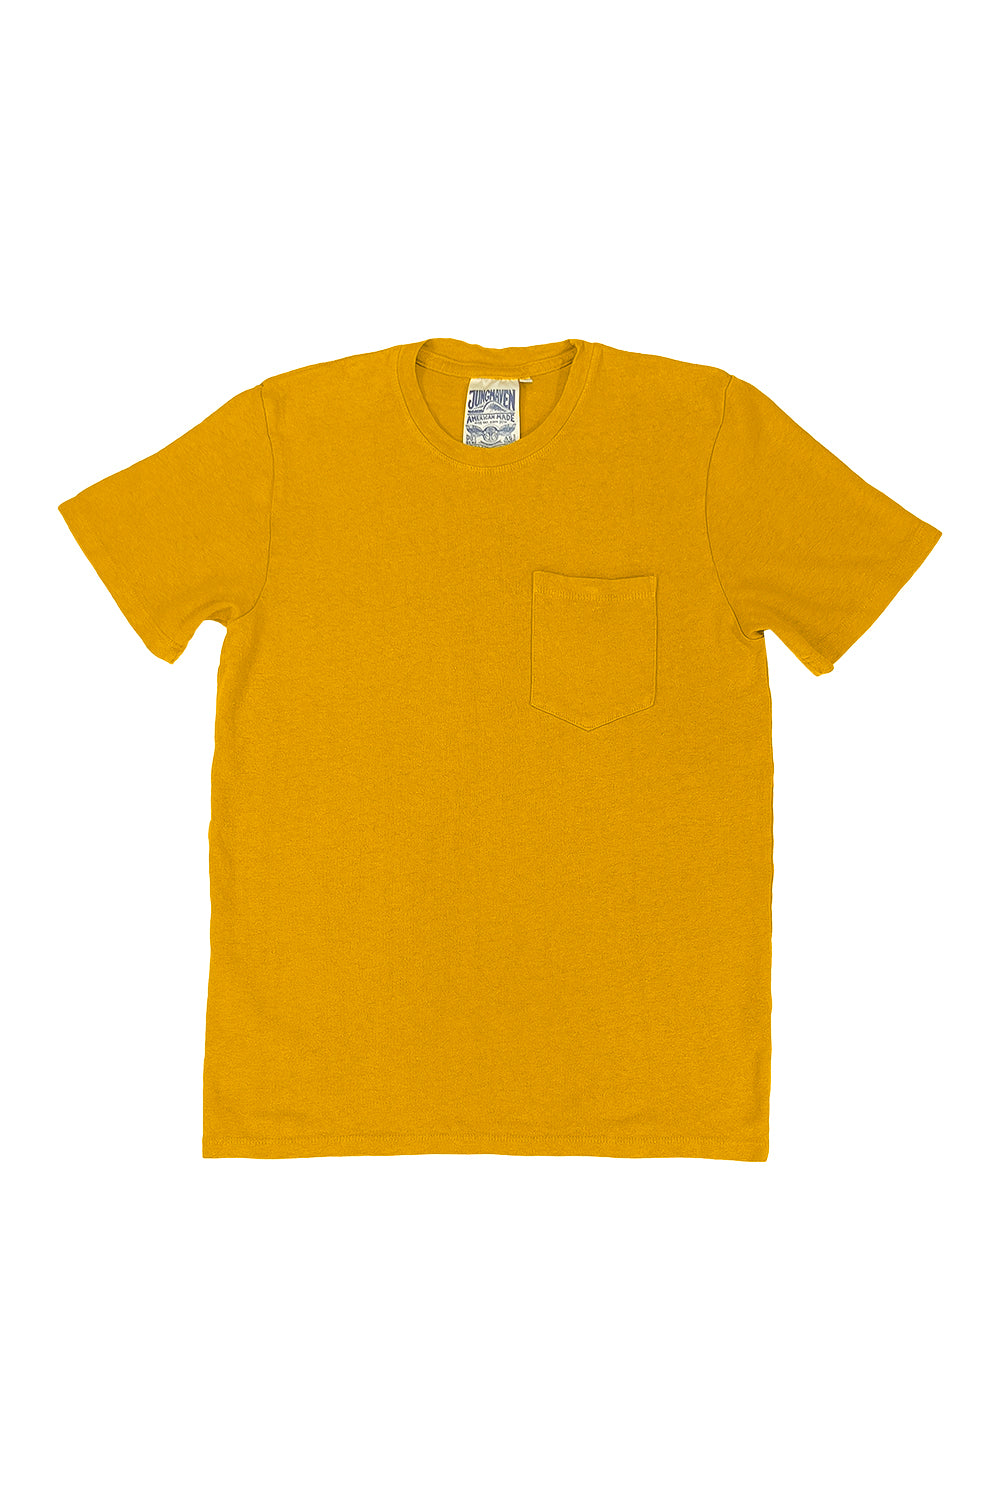 Boulder Pocket Tee | Jungmaven Hemp Clothing & Accessories / Color: Spicy Mustard